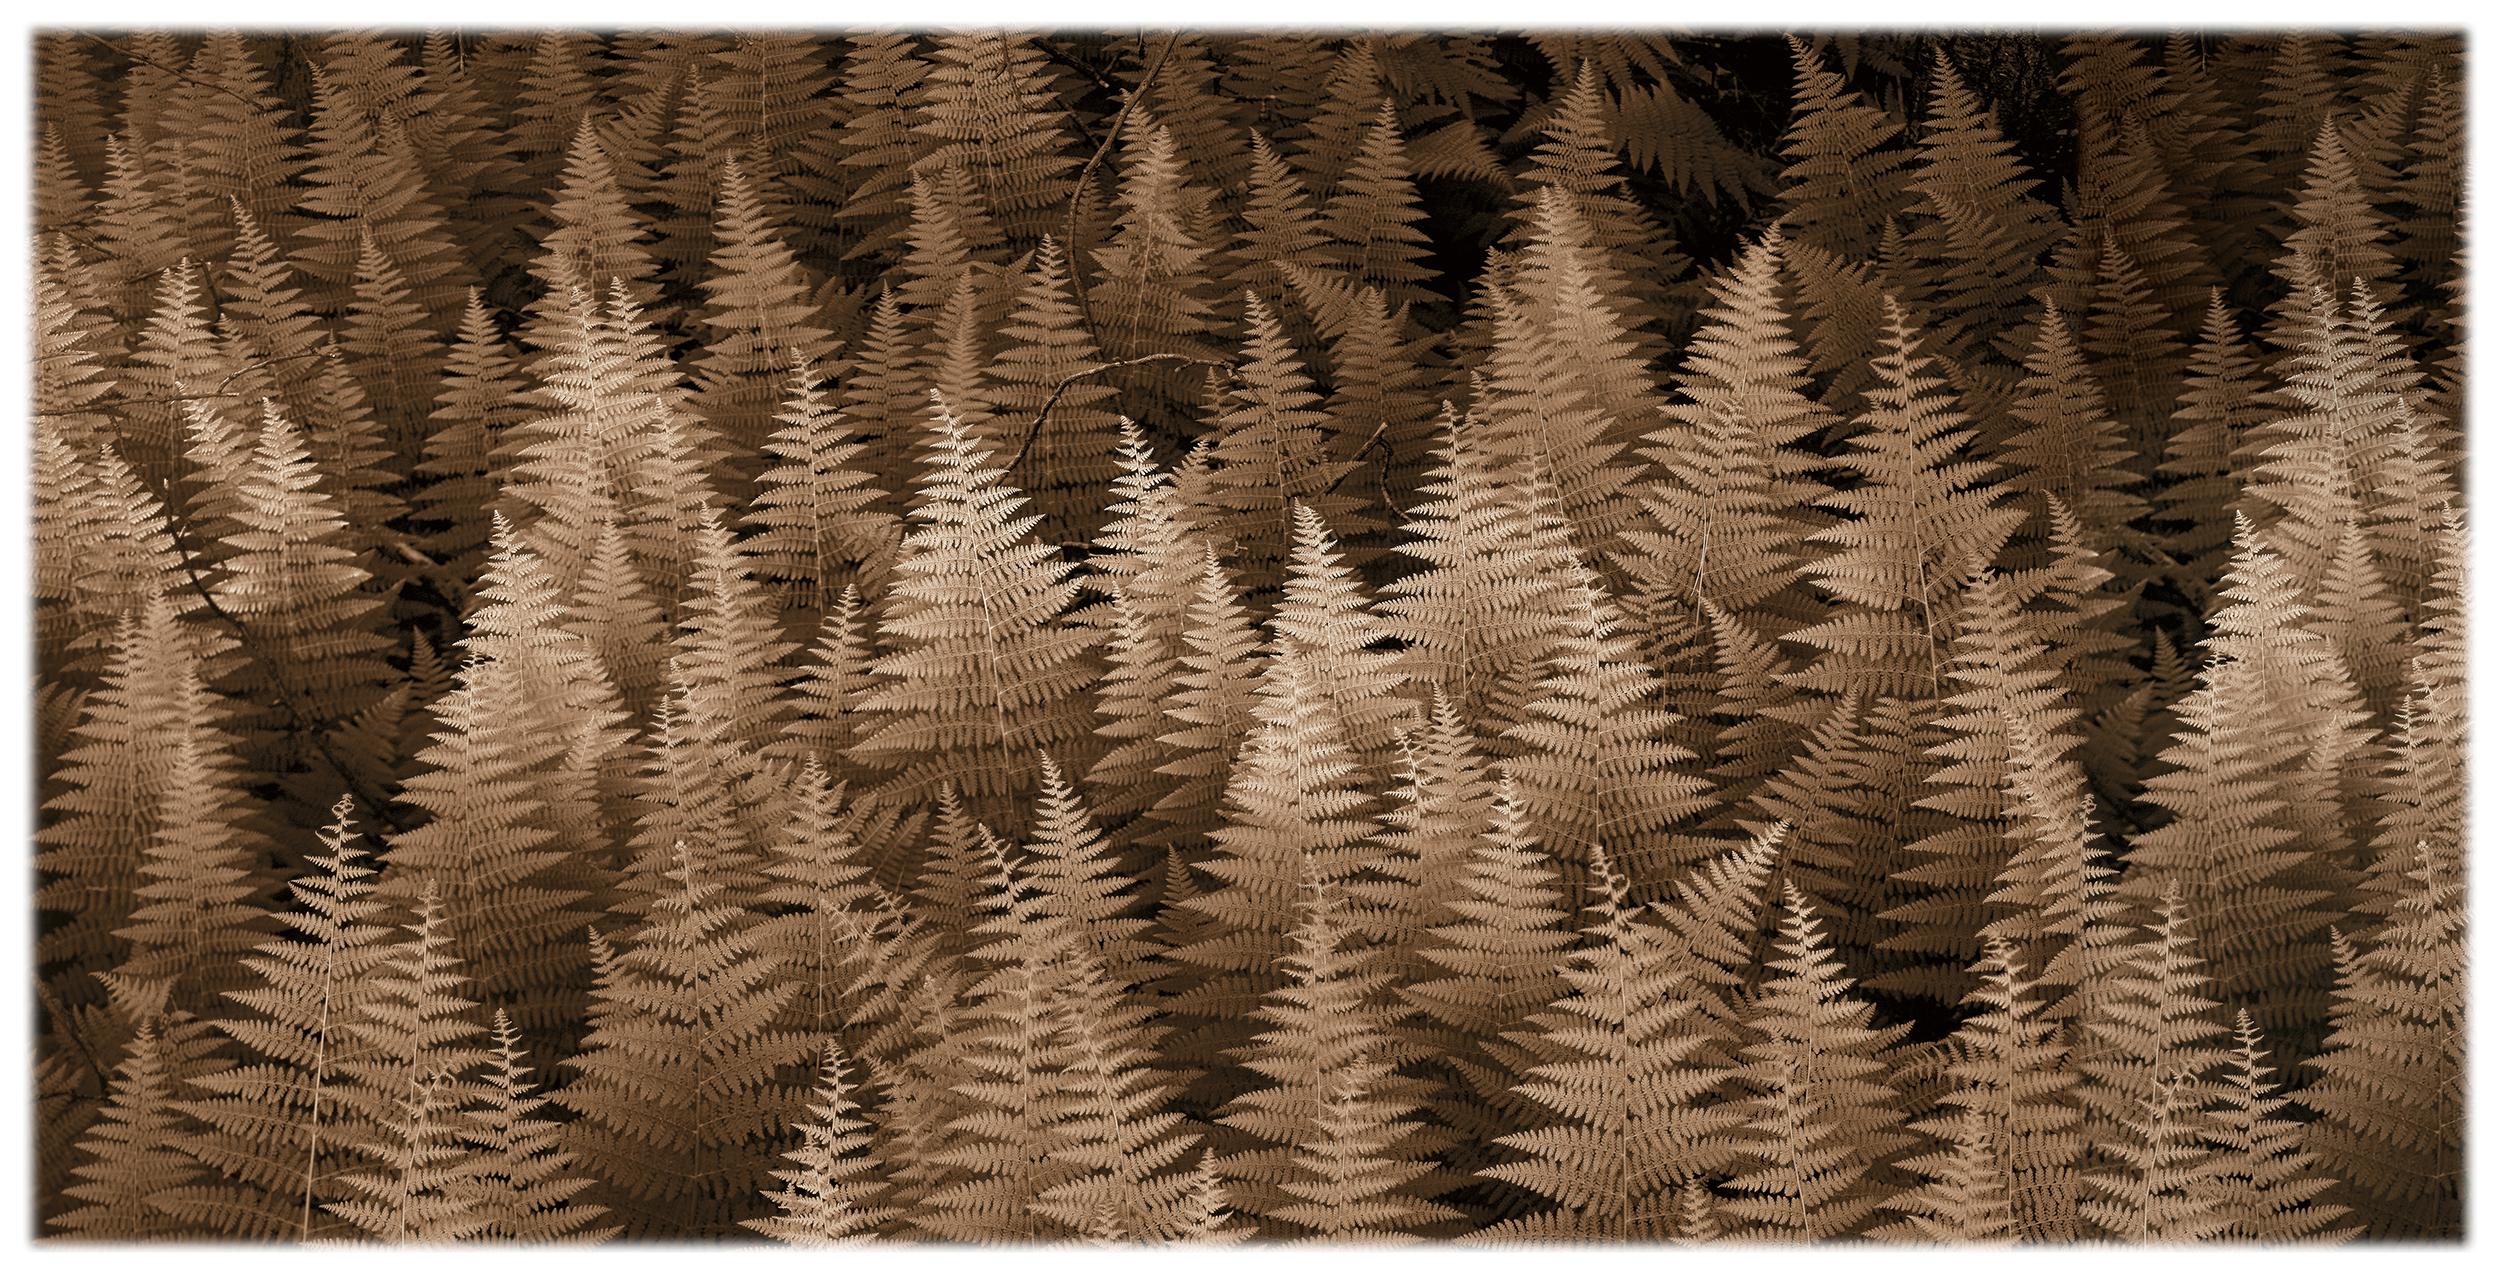 James Bleecker Color Photograph – Ferns Nr. 2 (Sepiafarbene botanische Stilllebenfotografie auf Aquarellpapier)